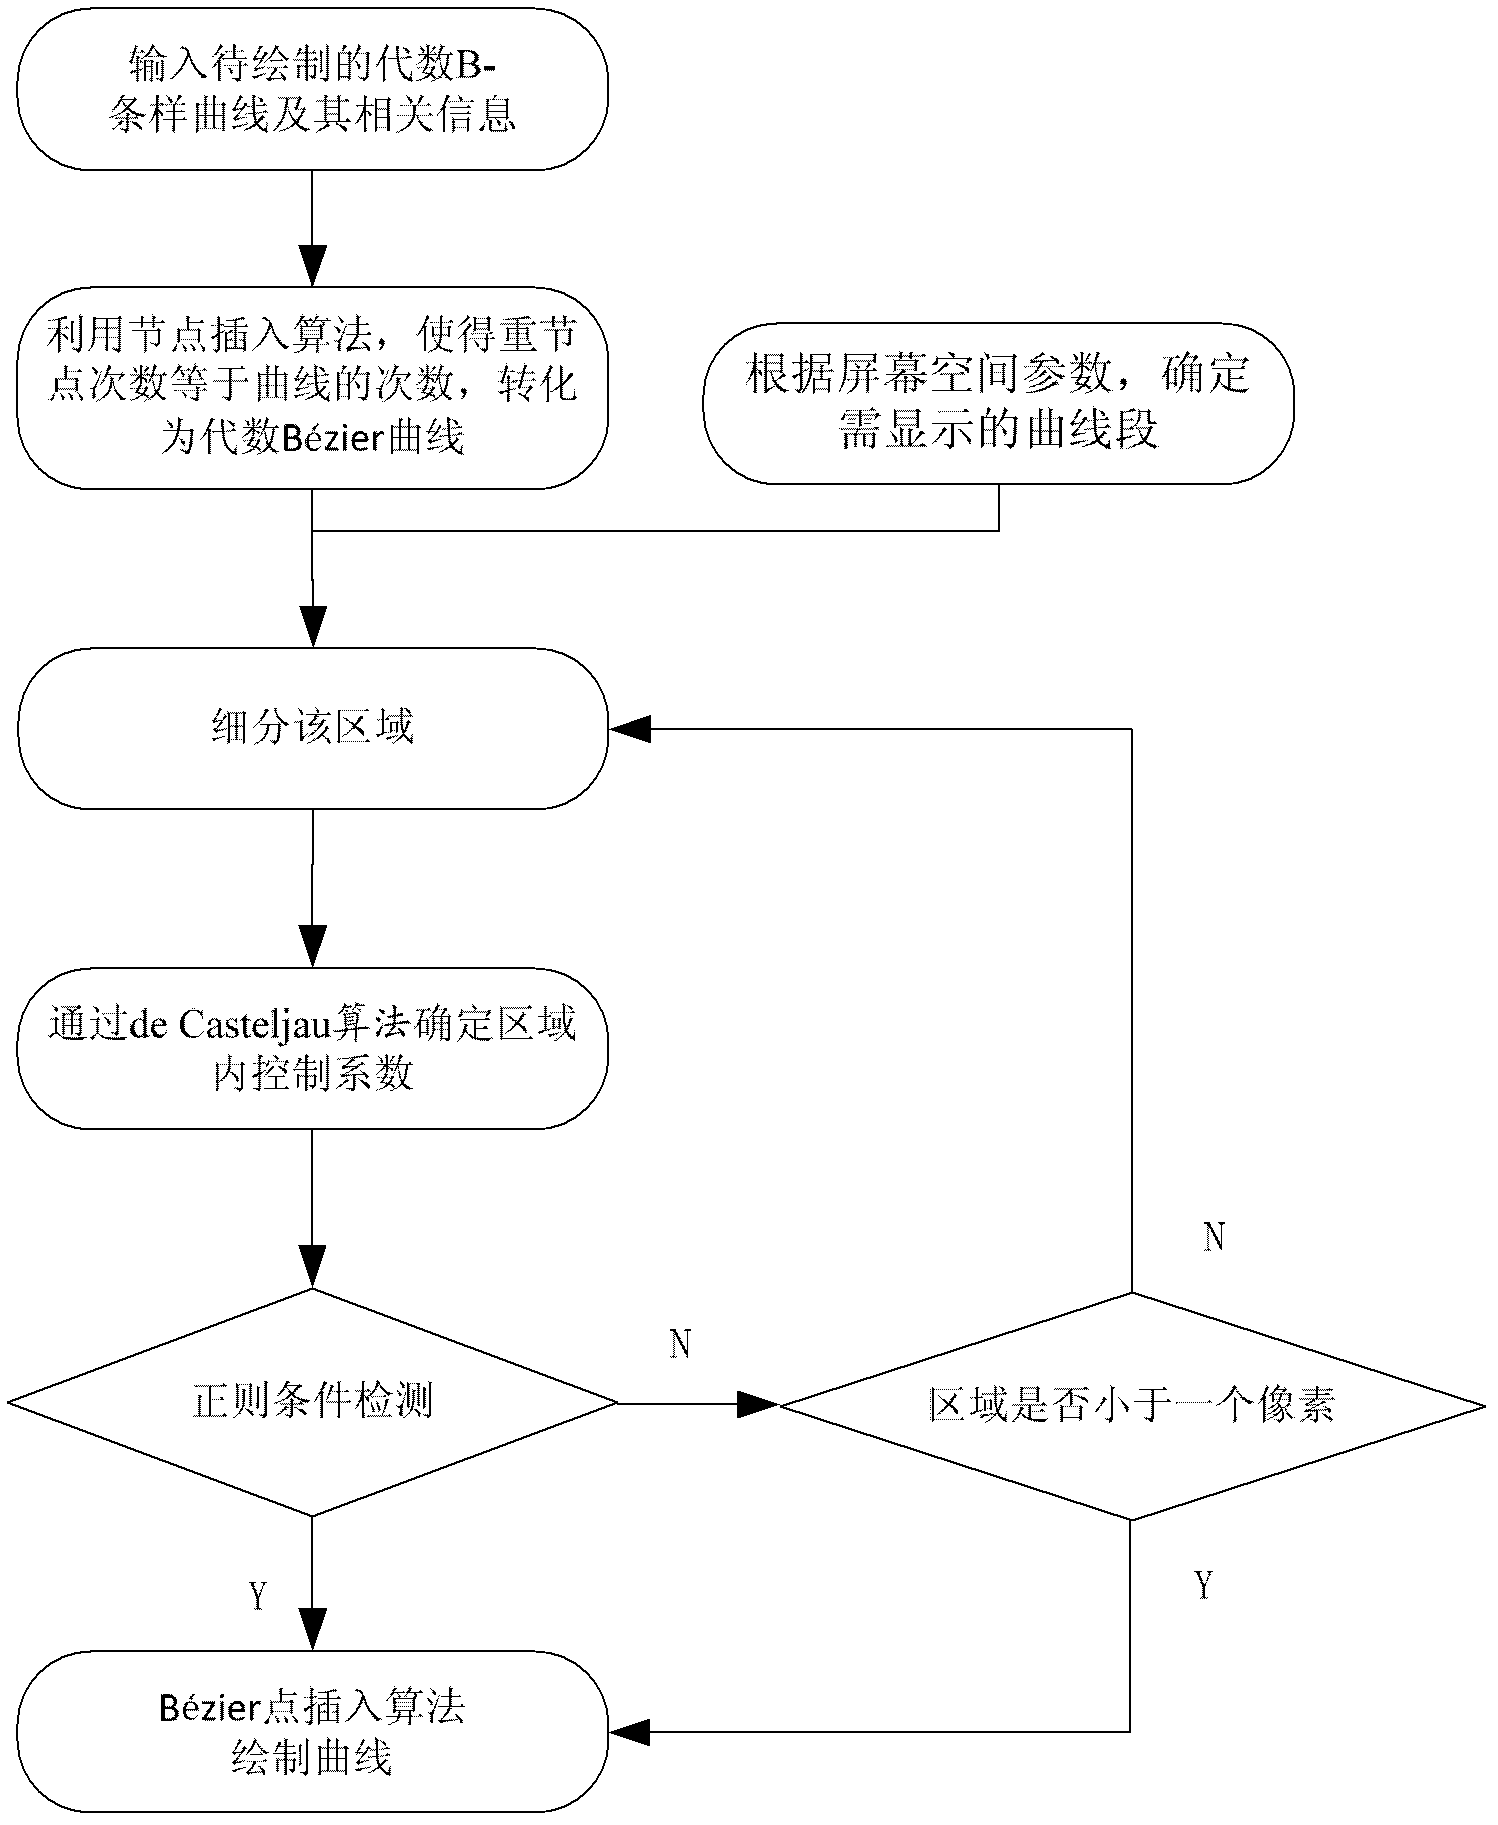 Rasterization method of algebraic B-spline curve based on regularization conditions